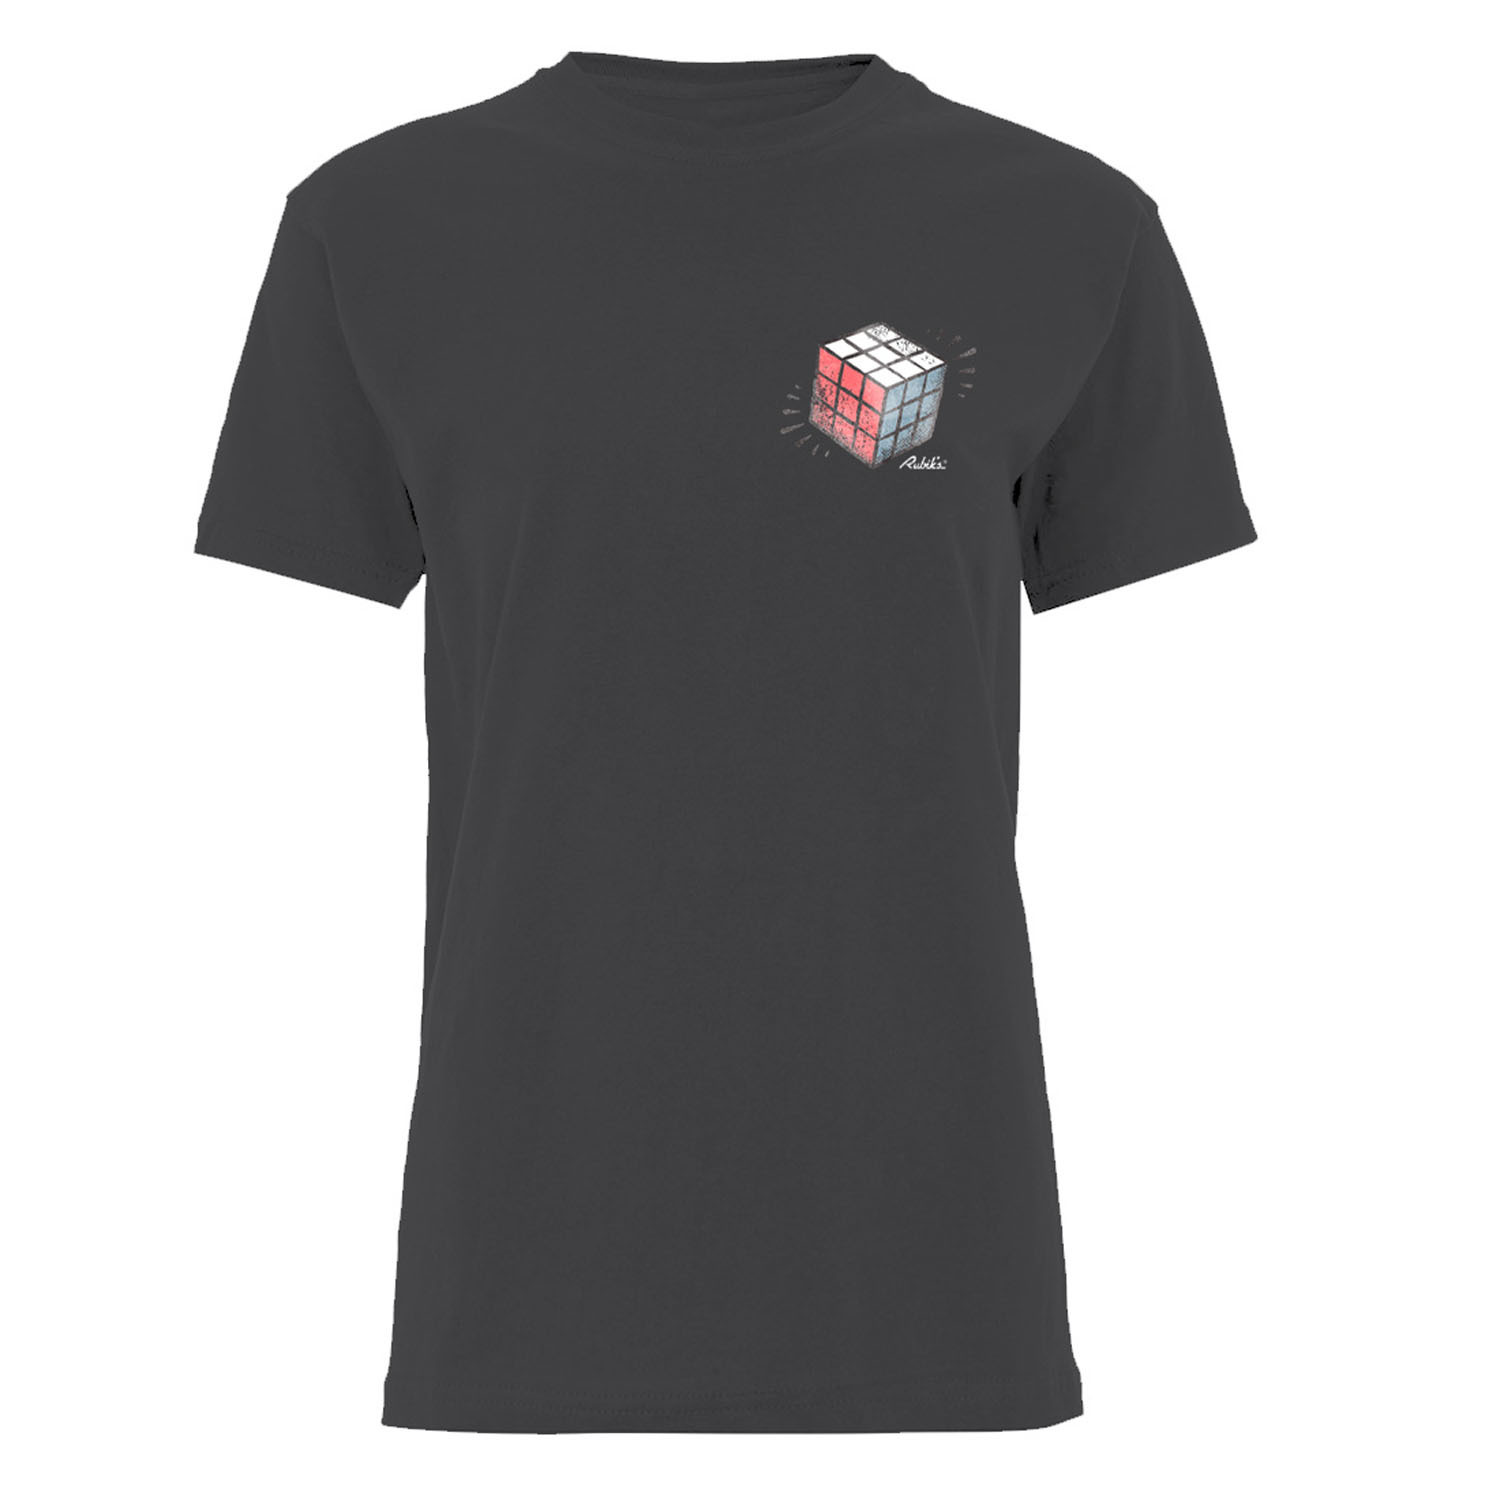 Rubix Cube T-Shirt - Black / XL Image 1